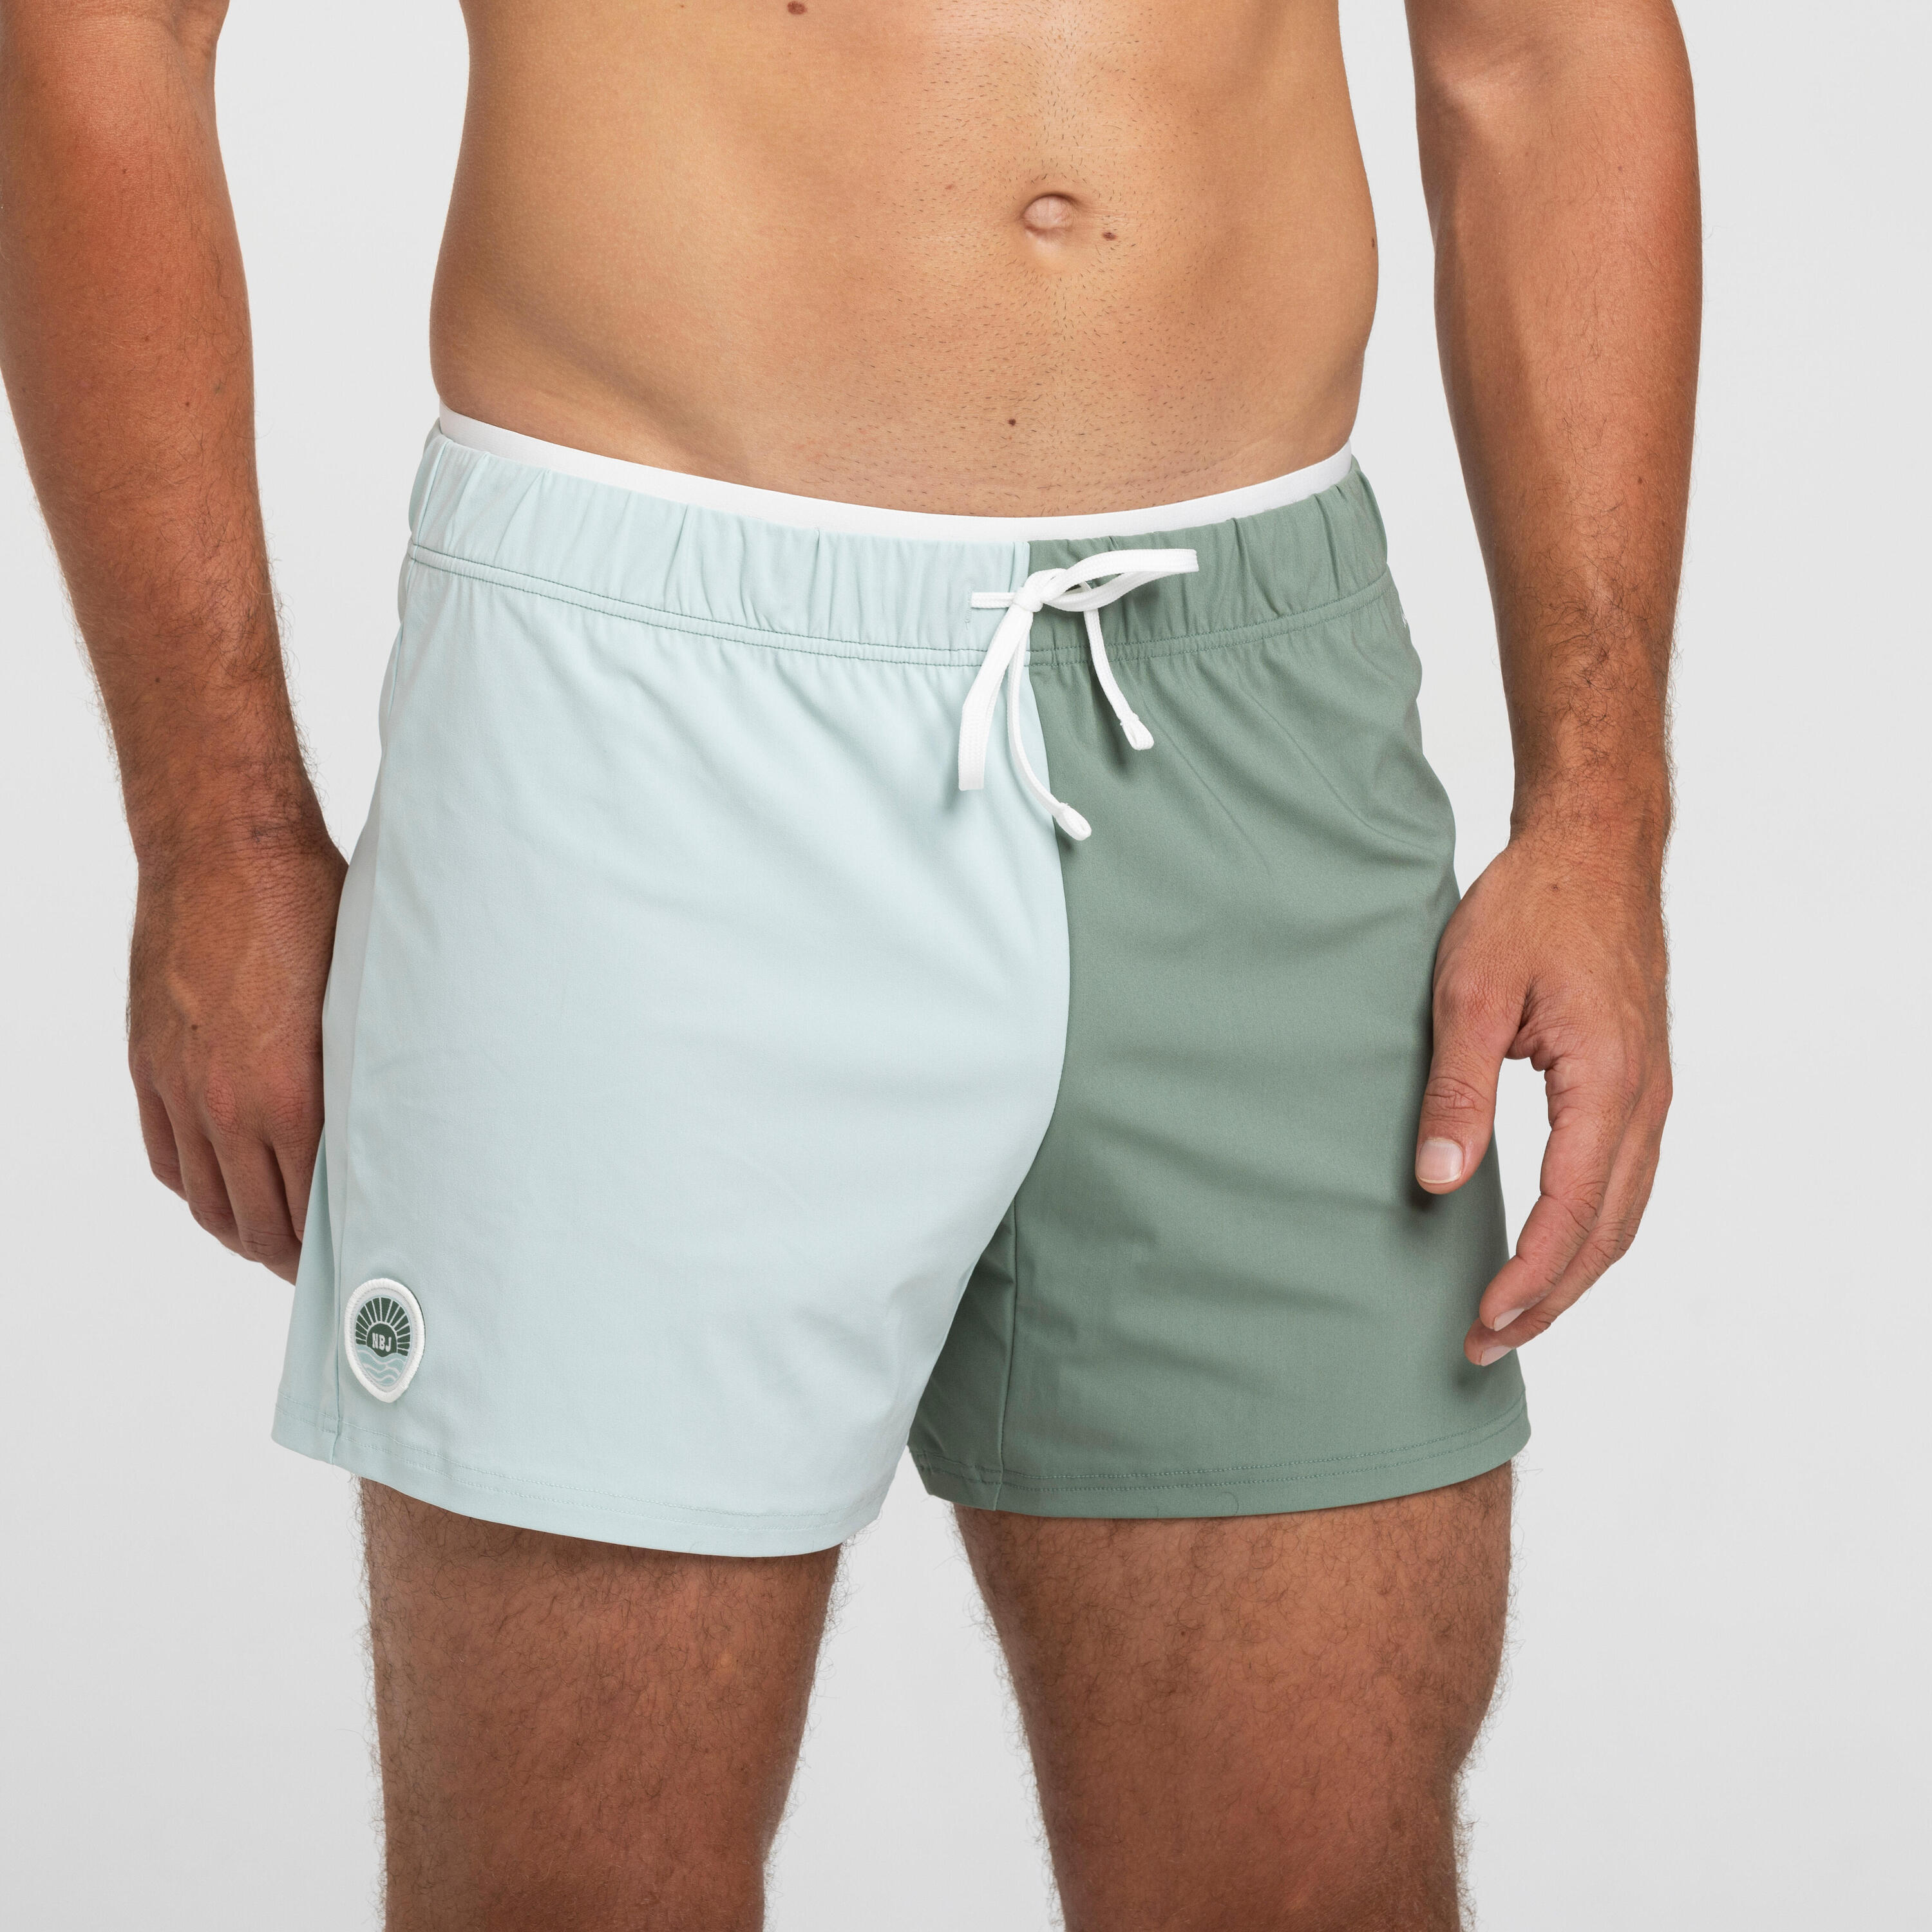 Men's swimming shorts 100 Short - Khaki green 1/6